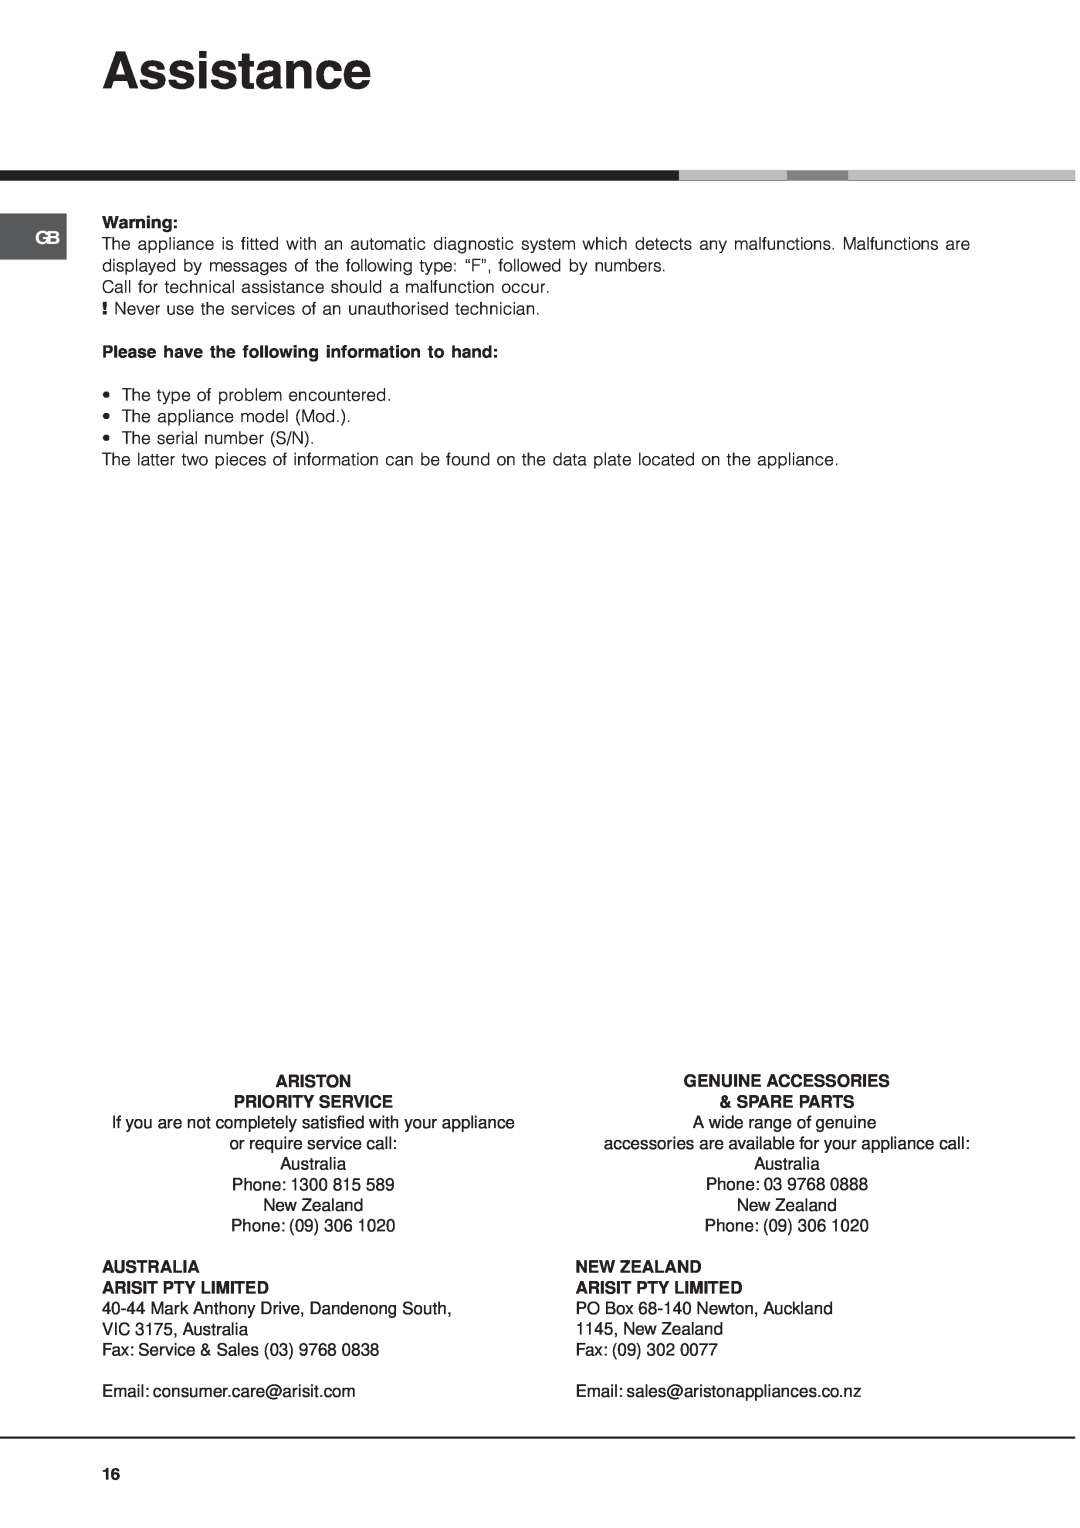 Ariston OS 99D P IX manual Assistance, New Zealand, Australia, Arisit Pty Limited, Mark Anthony Drive, Dandenong South, Fax 